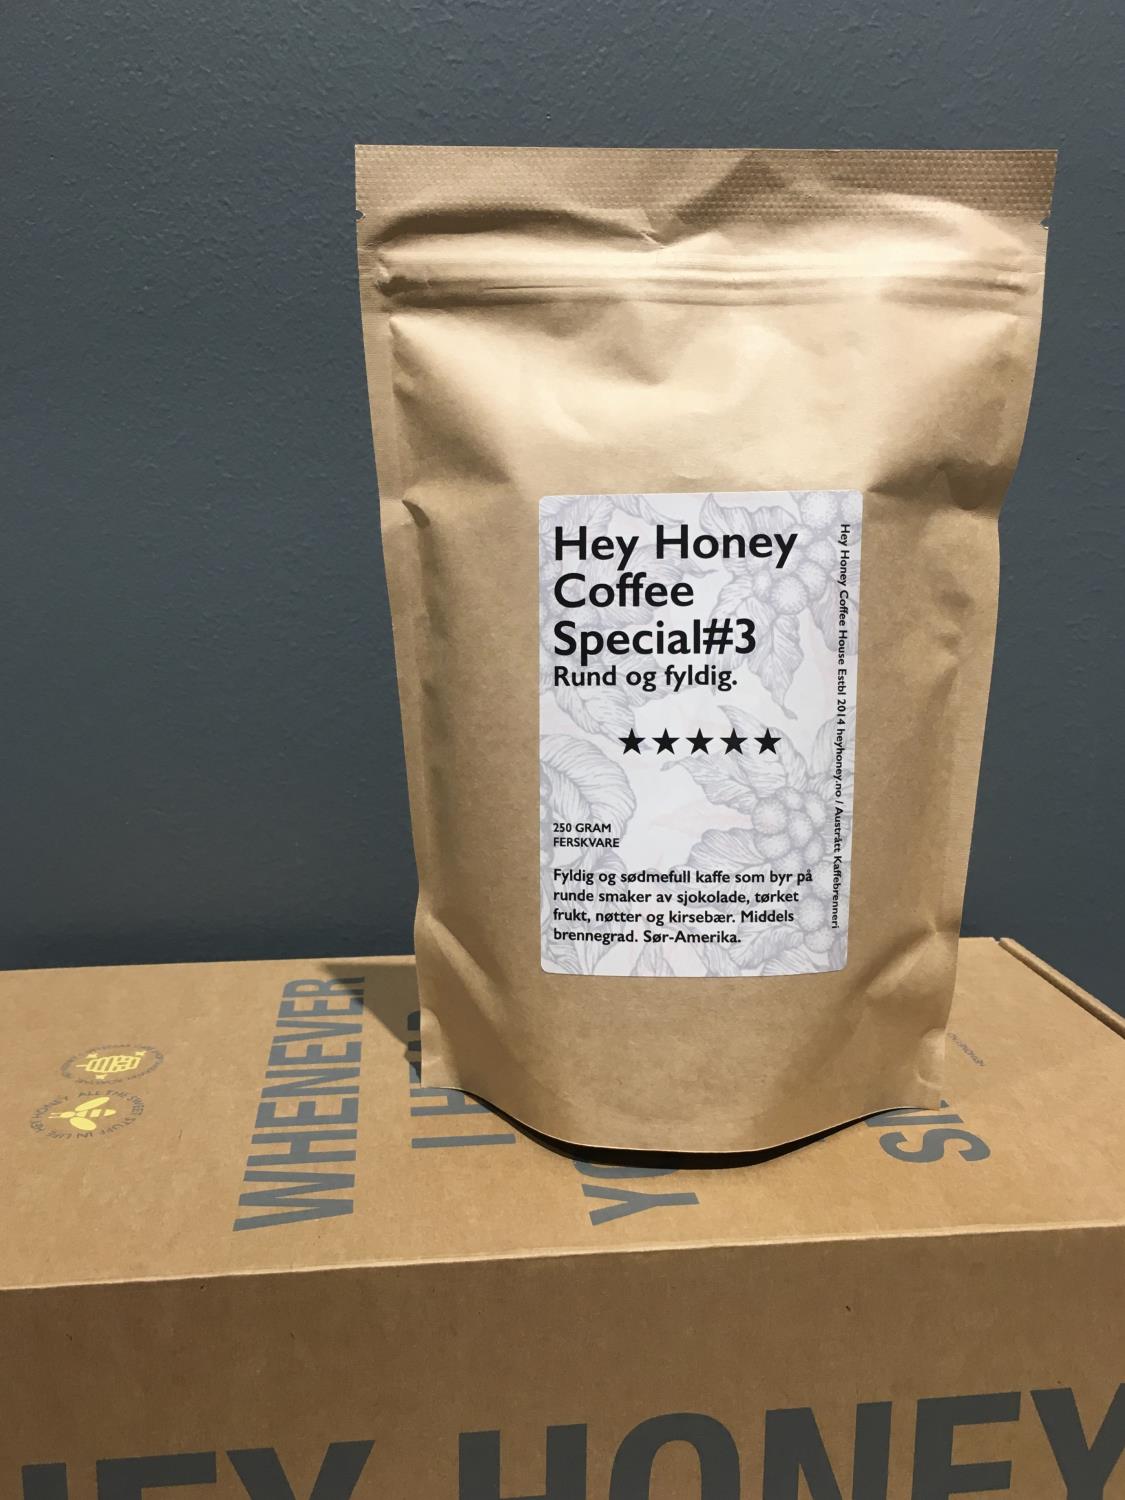 Hey Honey Coffee special #3, rund og fyldig